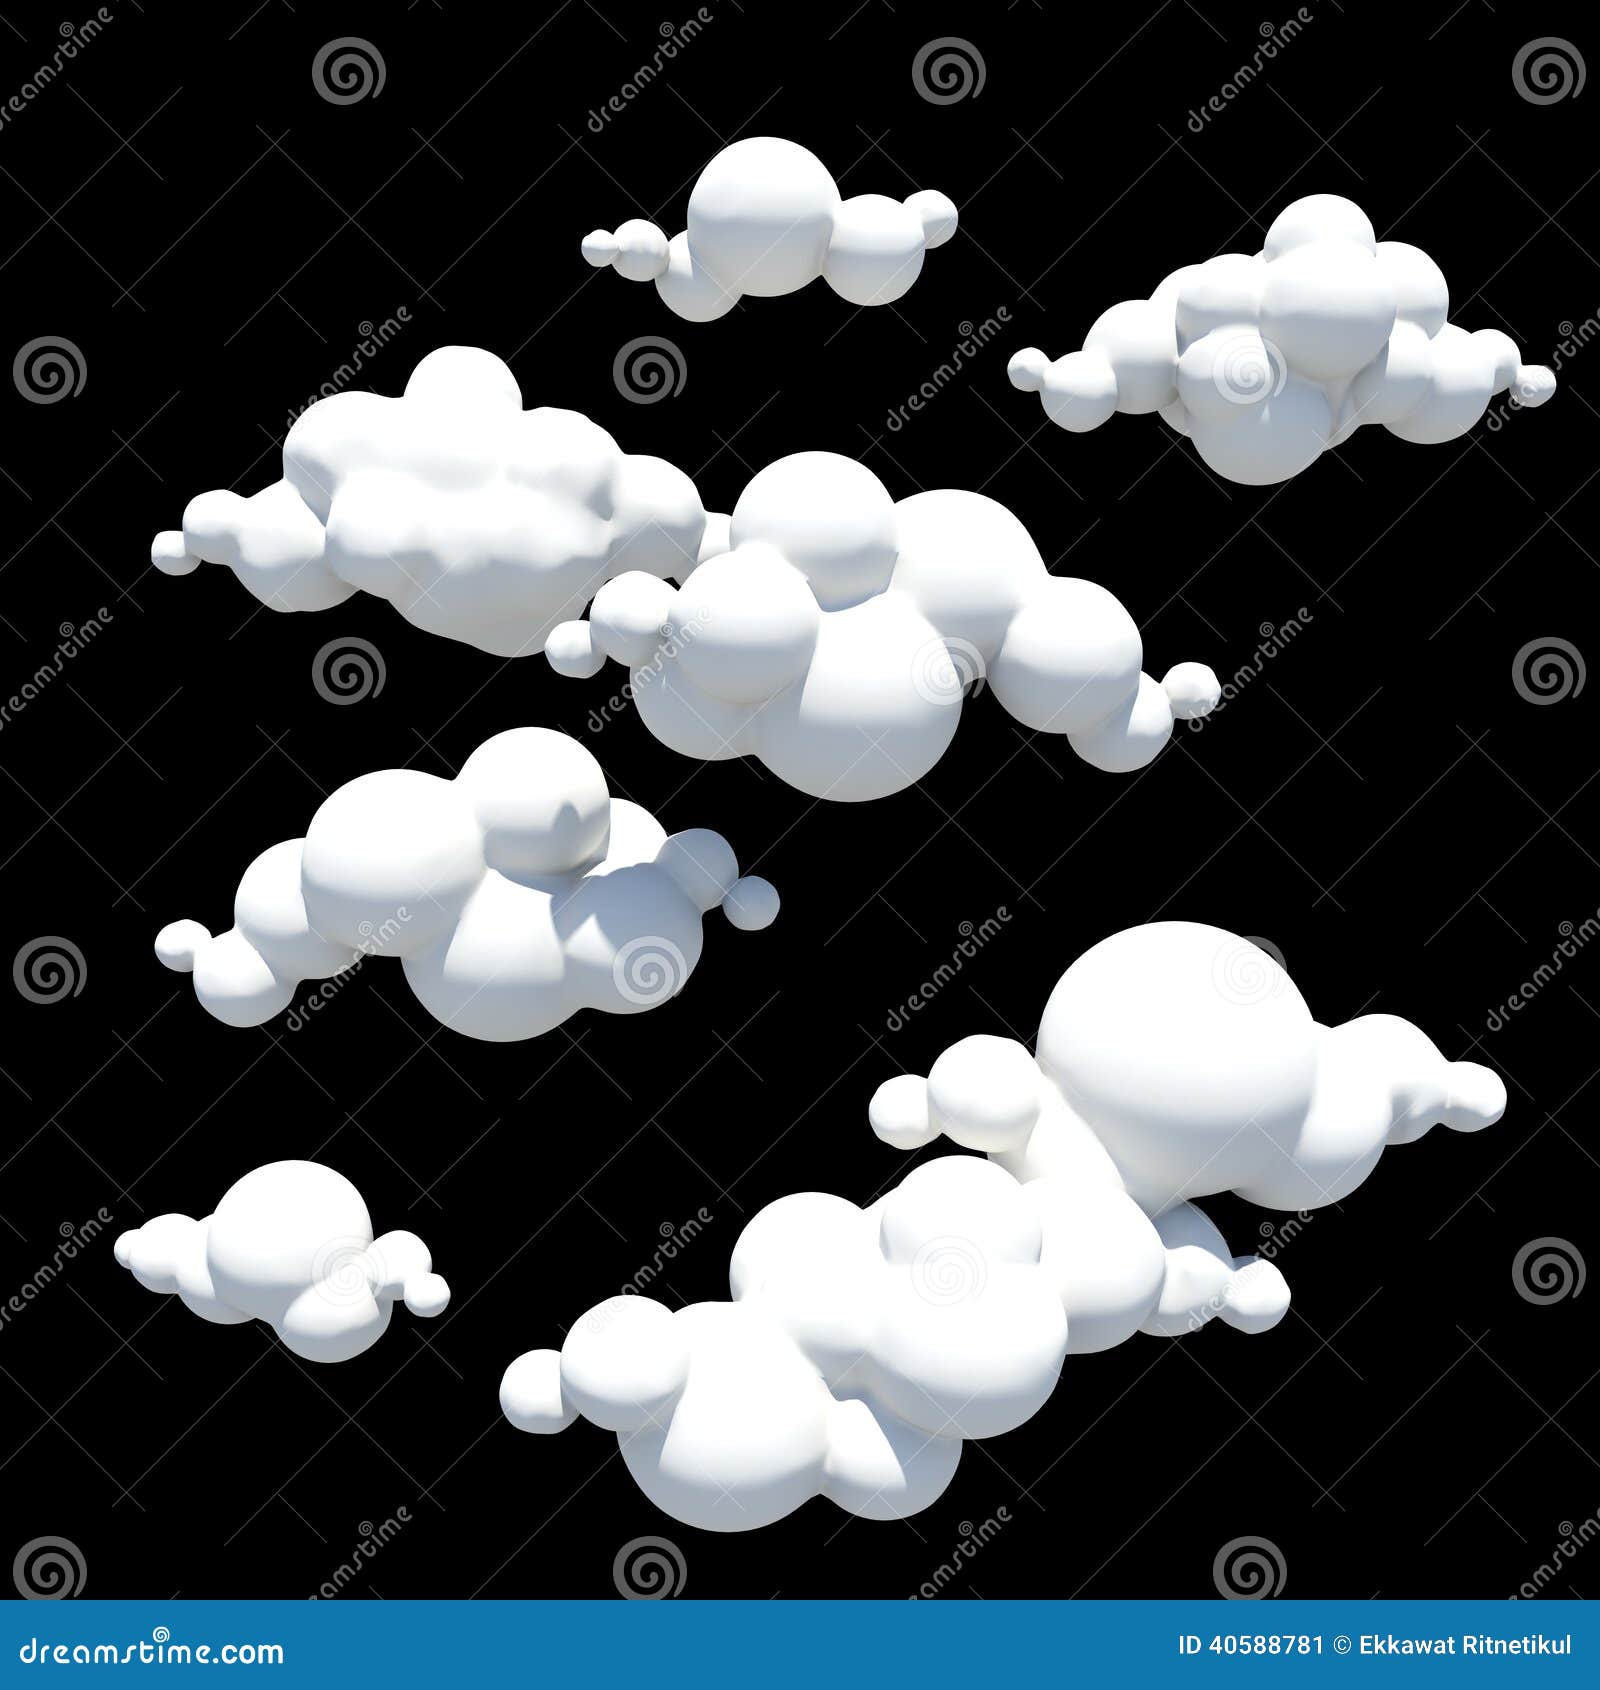 Cartoon Clouds, Design Element, PNG Transparent Background Stock Image -  Illustration of clear, cloud: 40588781